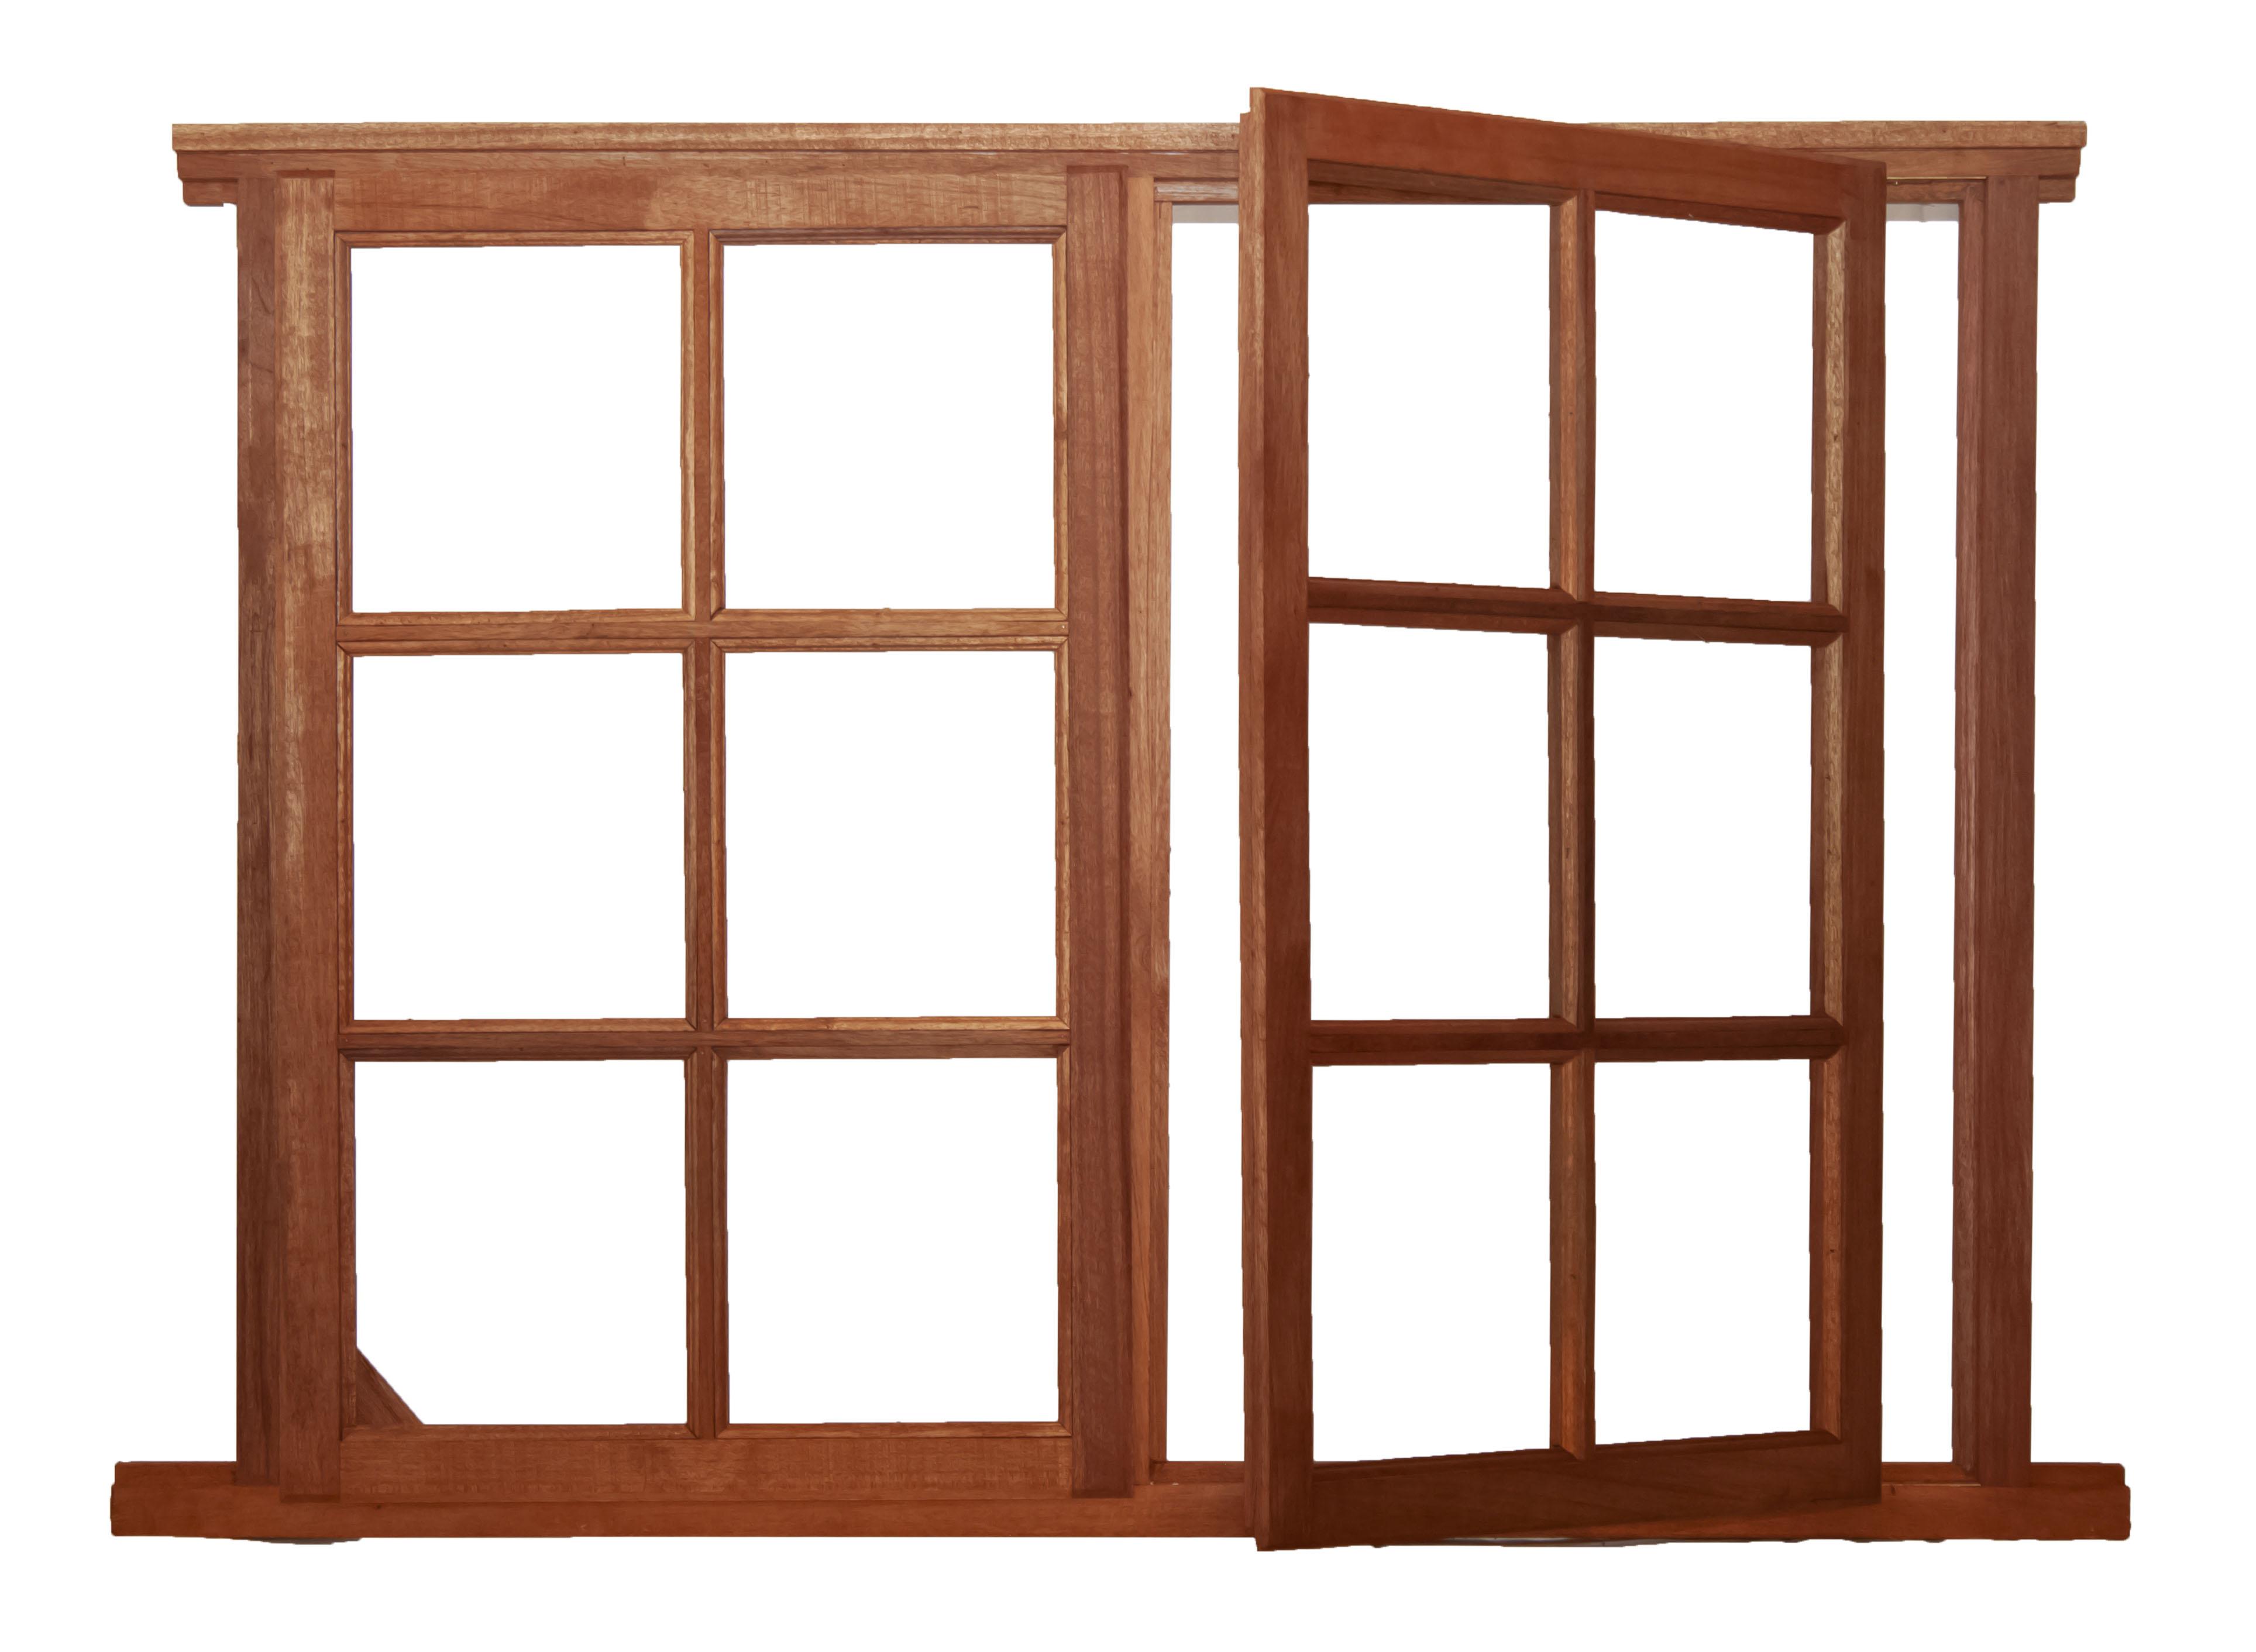 Hardware > Building Materials > Wooden Windows